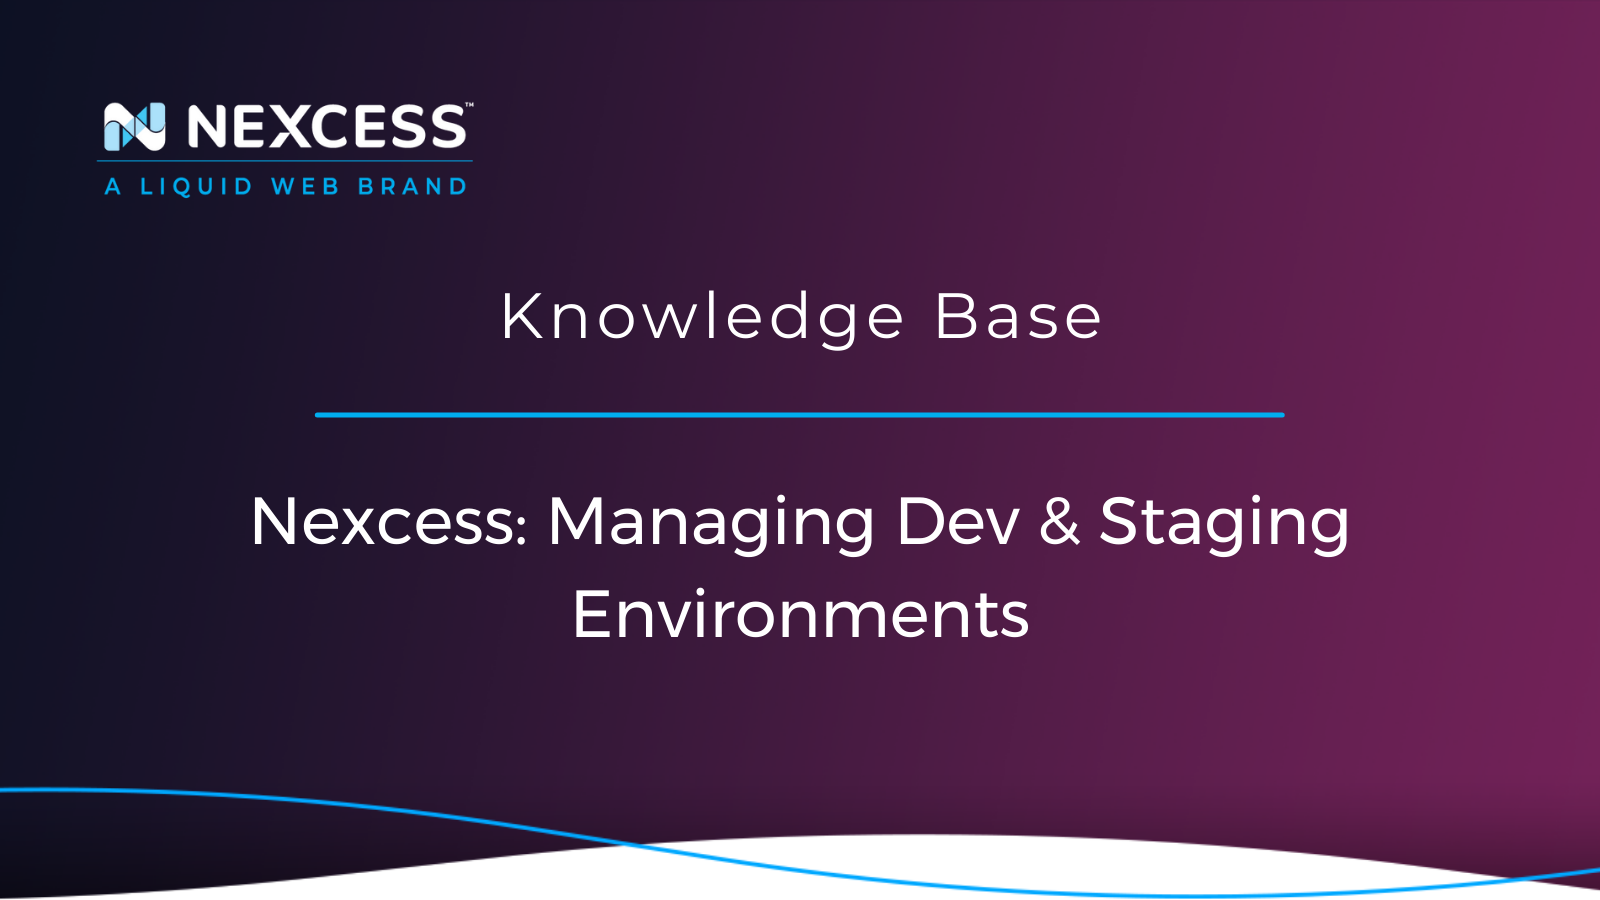 Nexcess: Managing Dev & Staging Environments